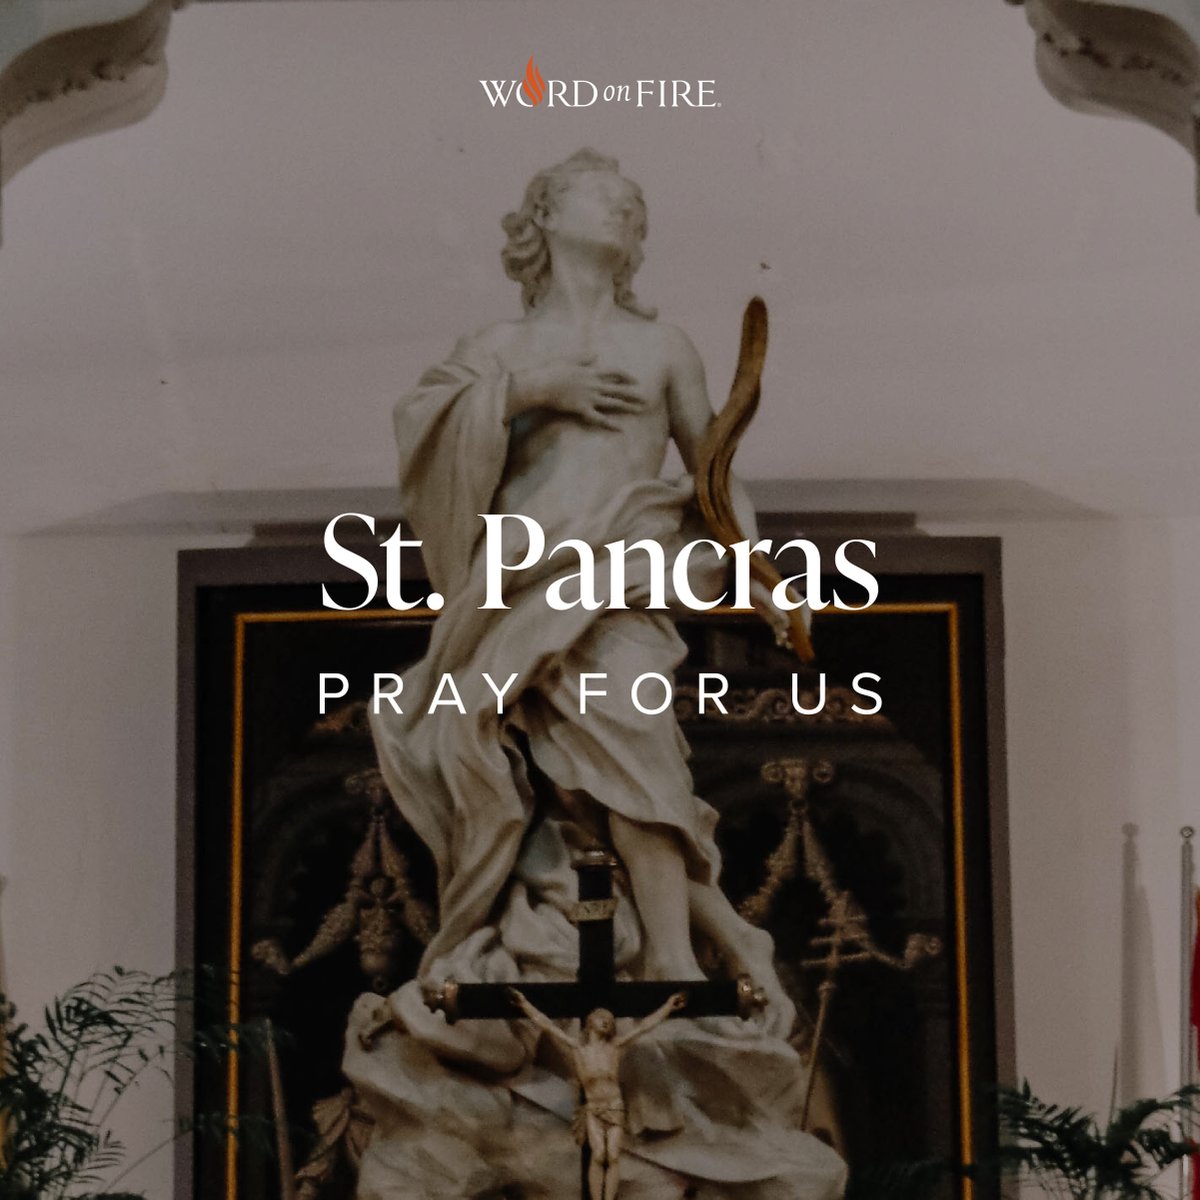 St. Pancras, pray for us!